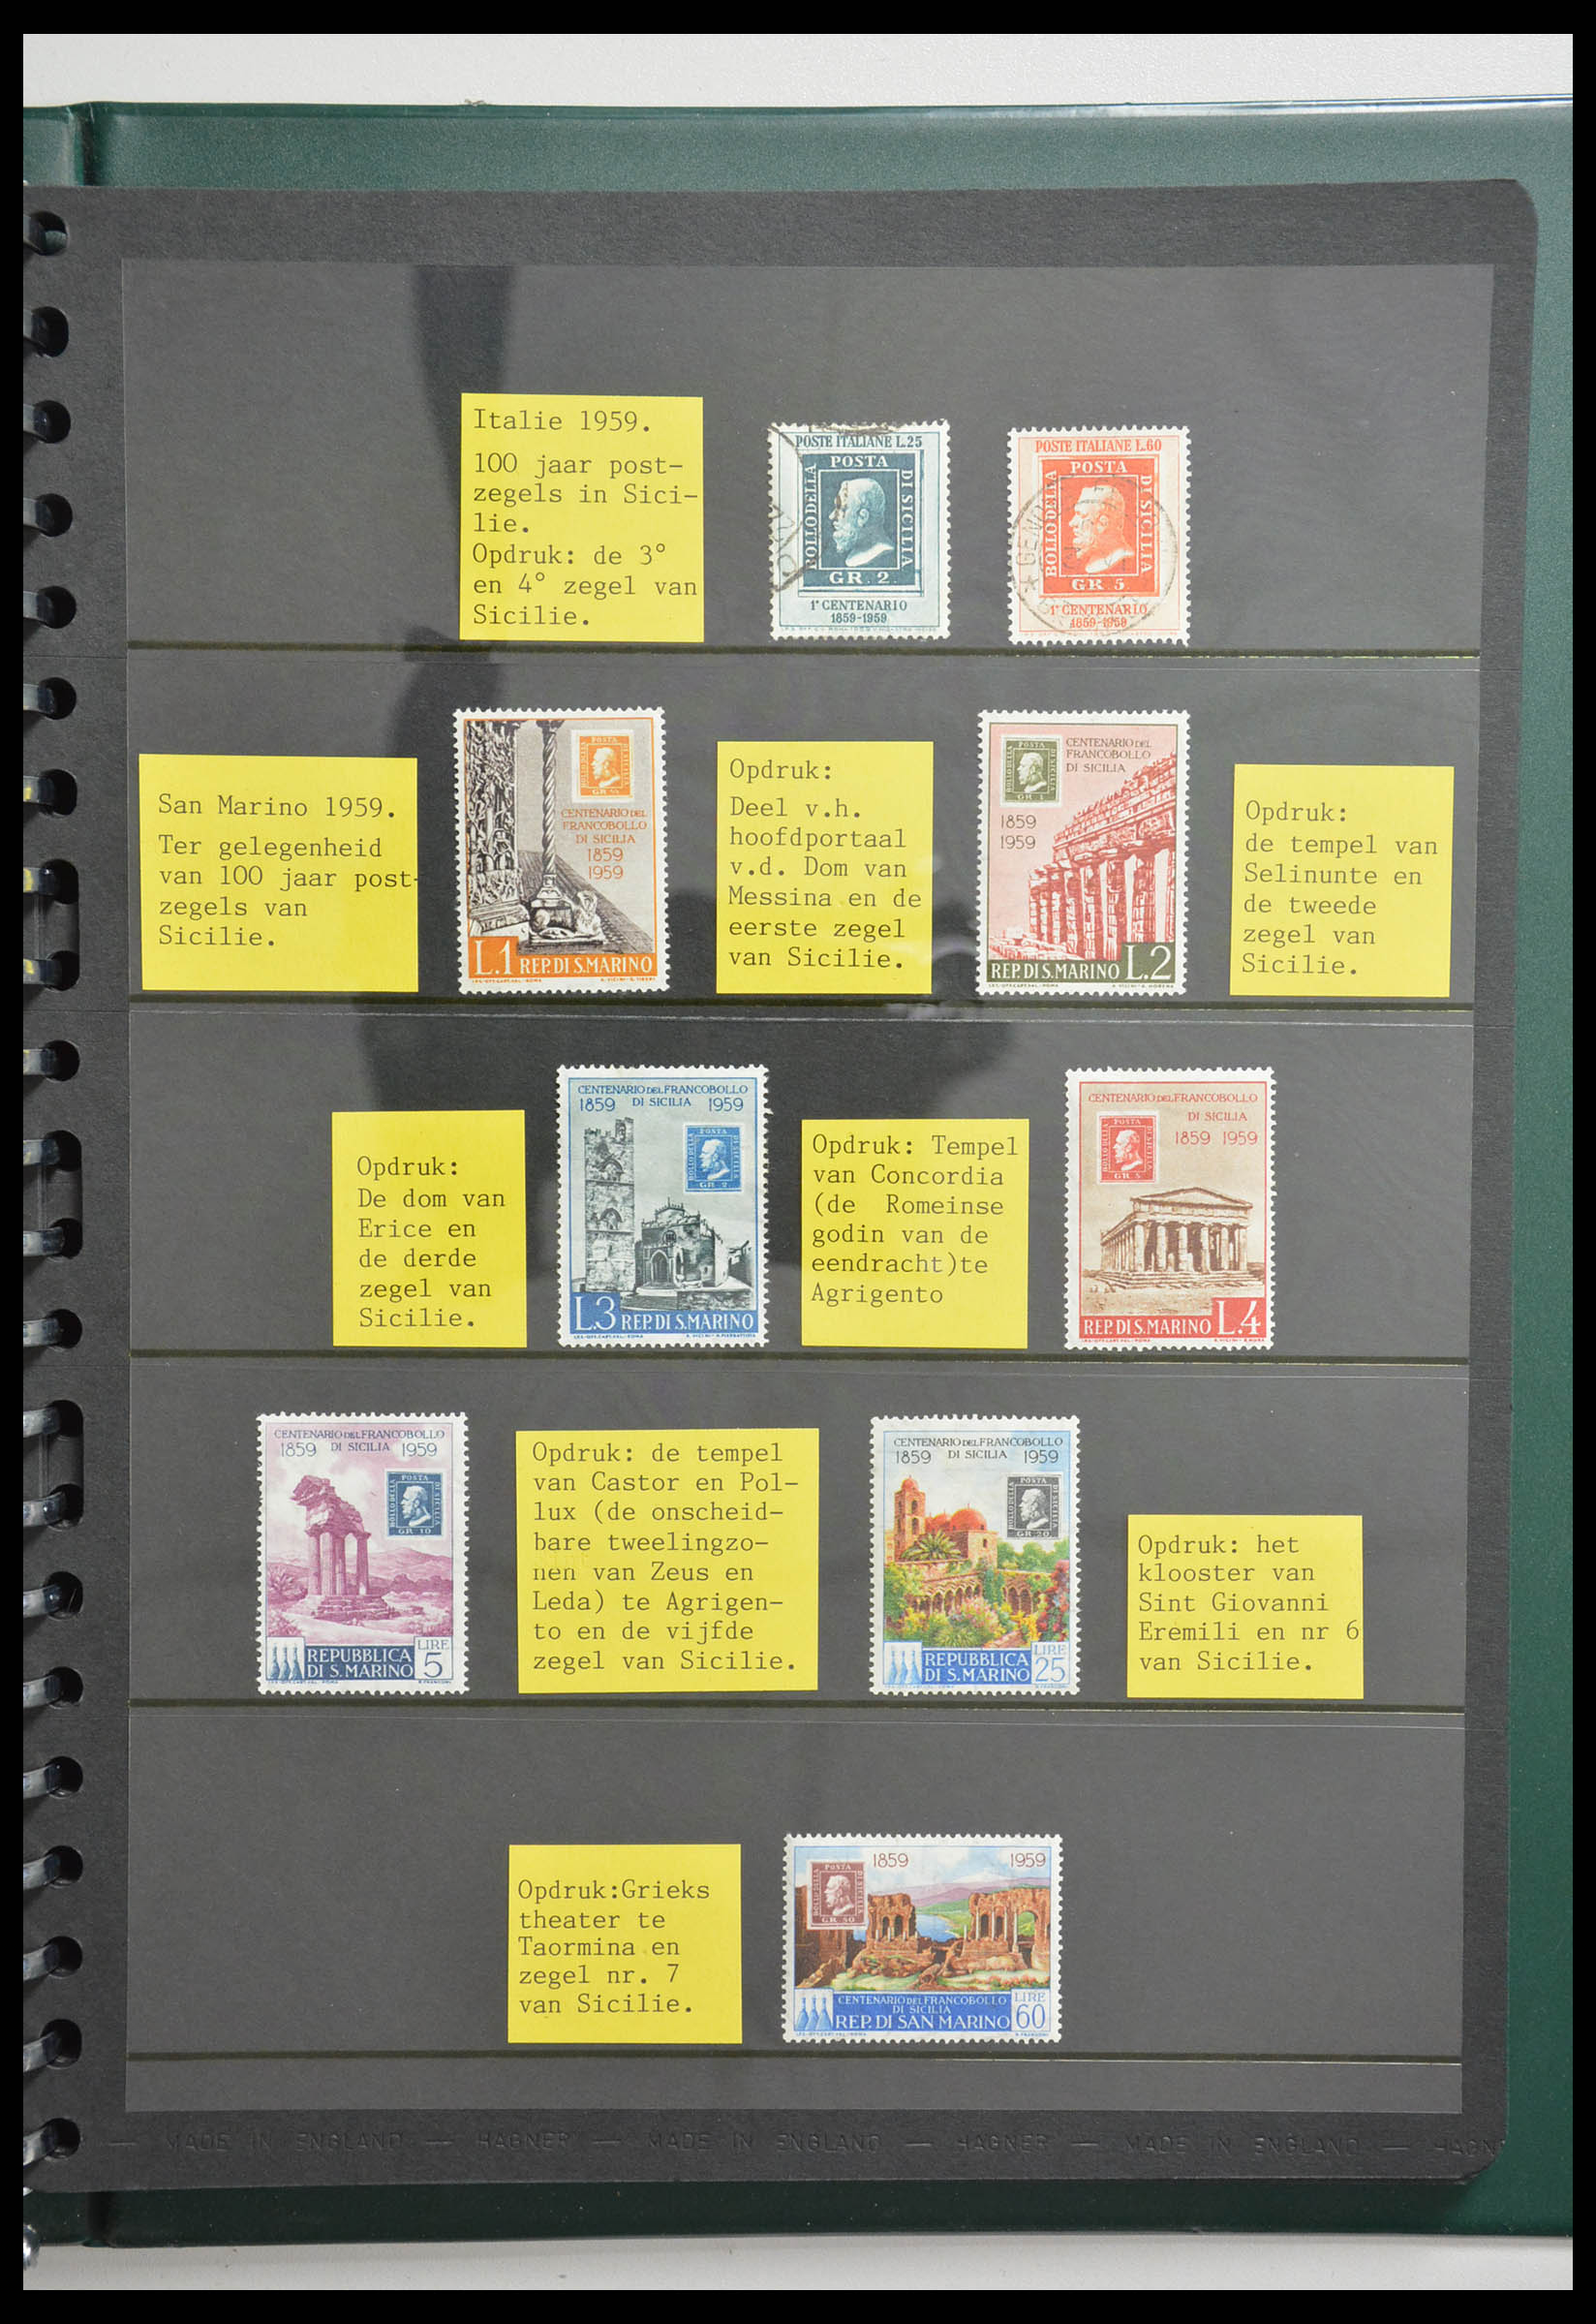 28337 119 - 28337 Postzegel op postzegel 1840-2001.